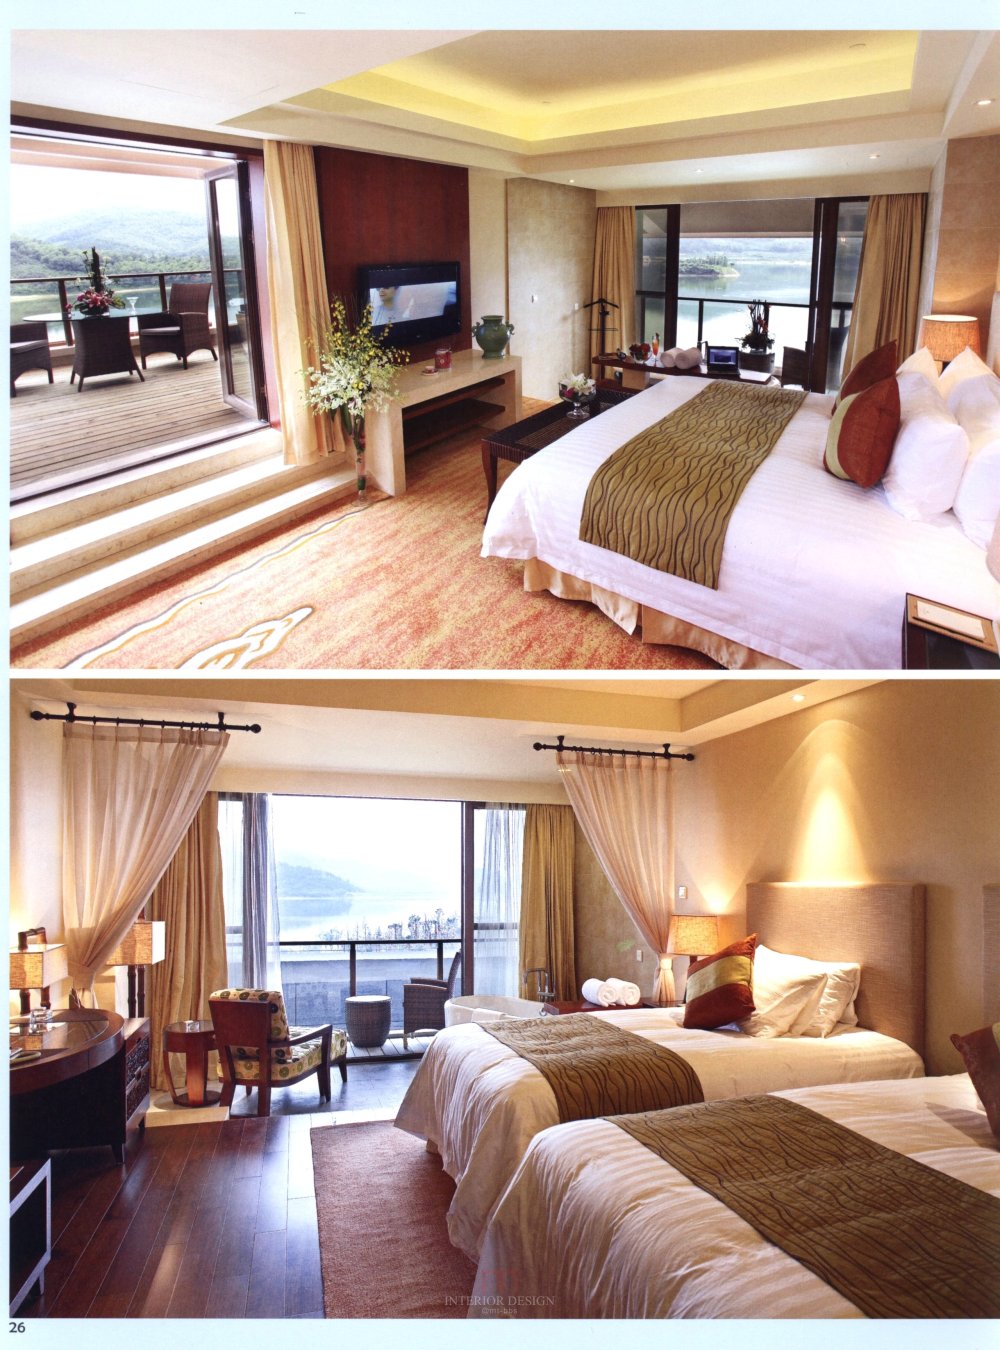 101全球酒店客房 101HOTELS GUEST ROOMS_图站_AiJpgg_com_021.jpg